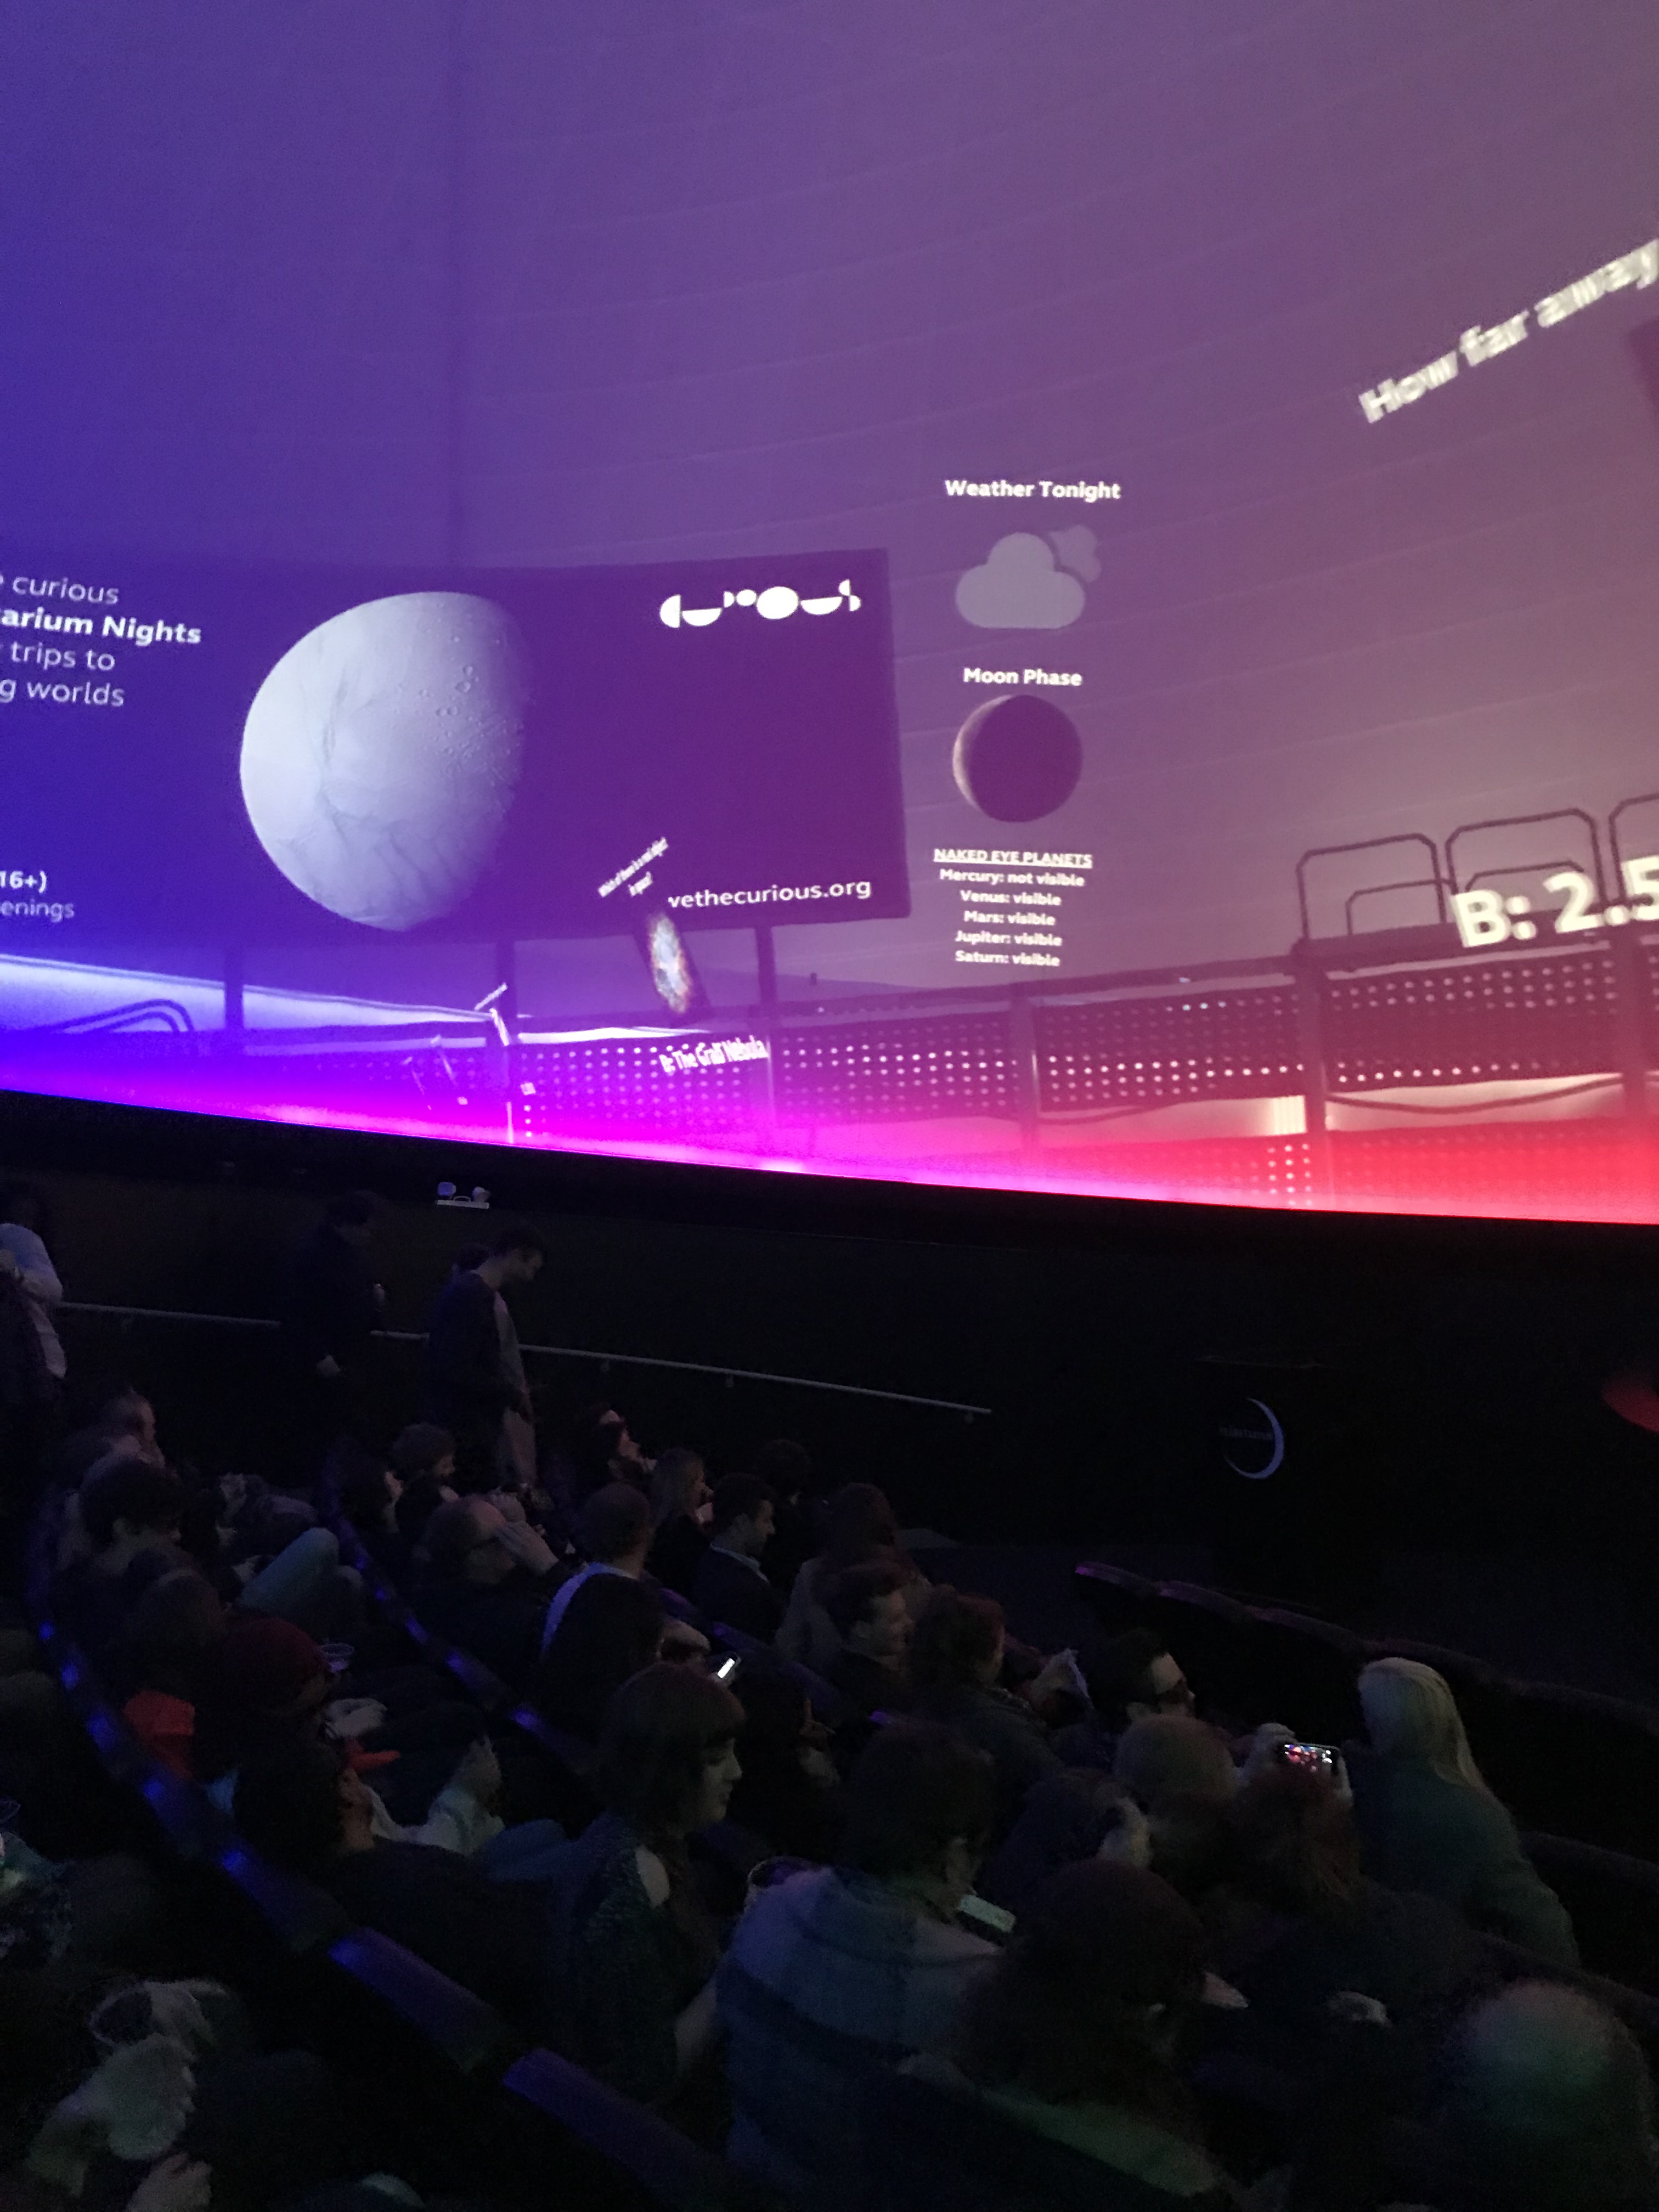 The opening screen at Bristol's Planetarium